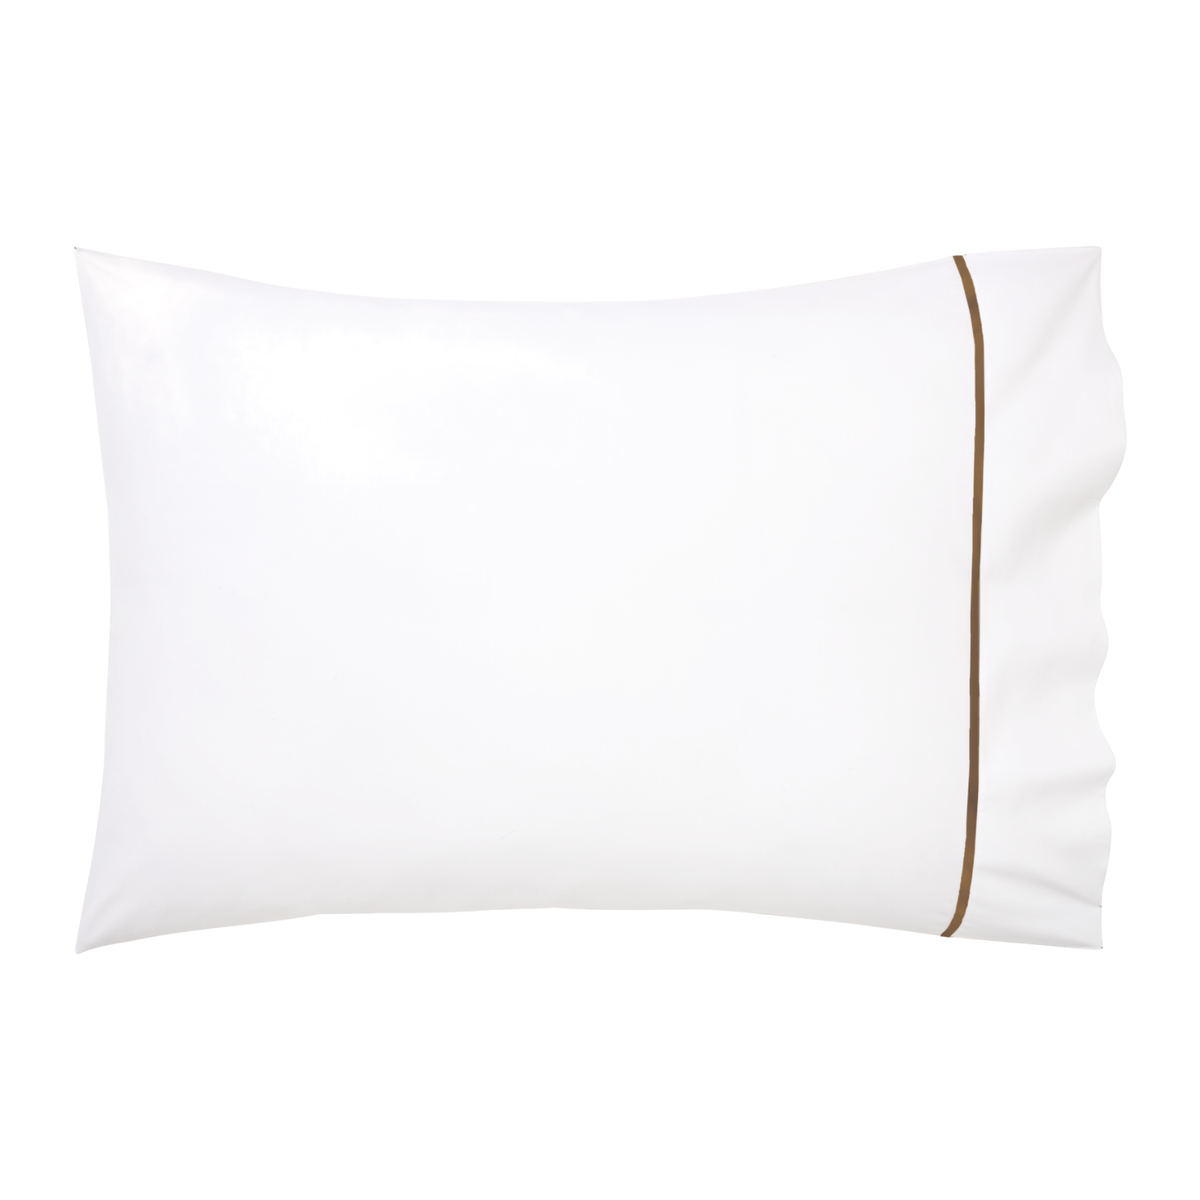 Pillowcase of Yves Delorme Athena Bedding in Bronze Color